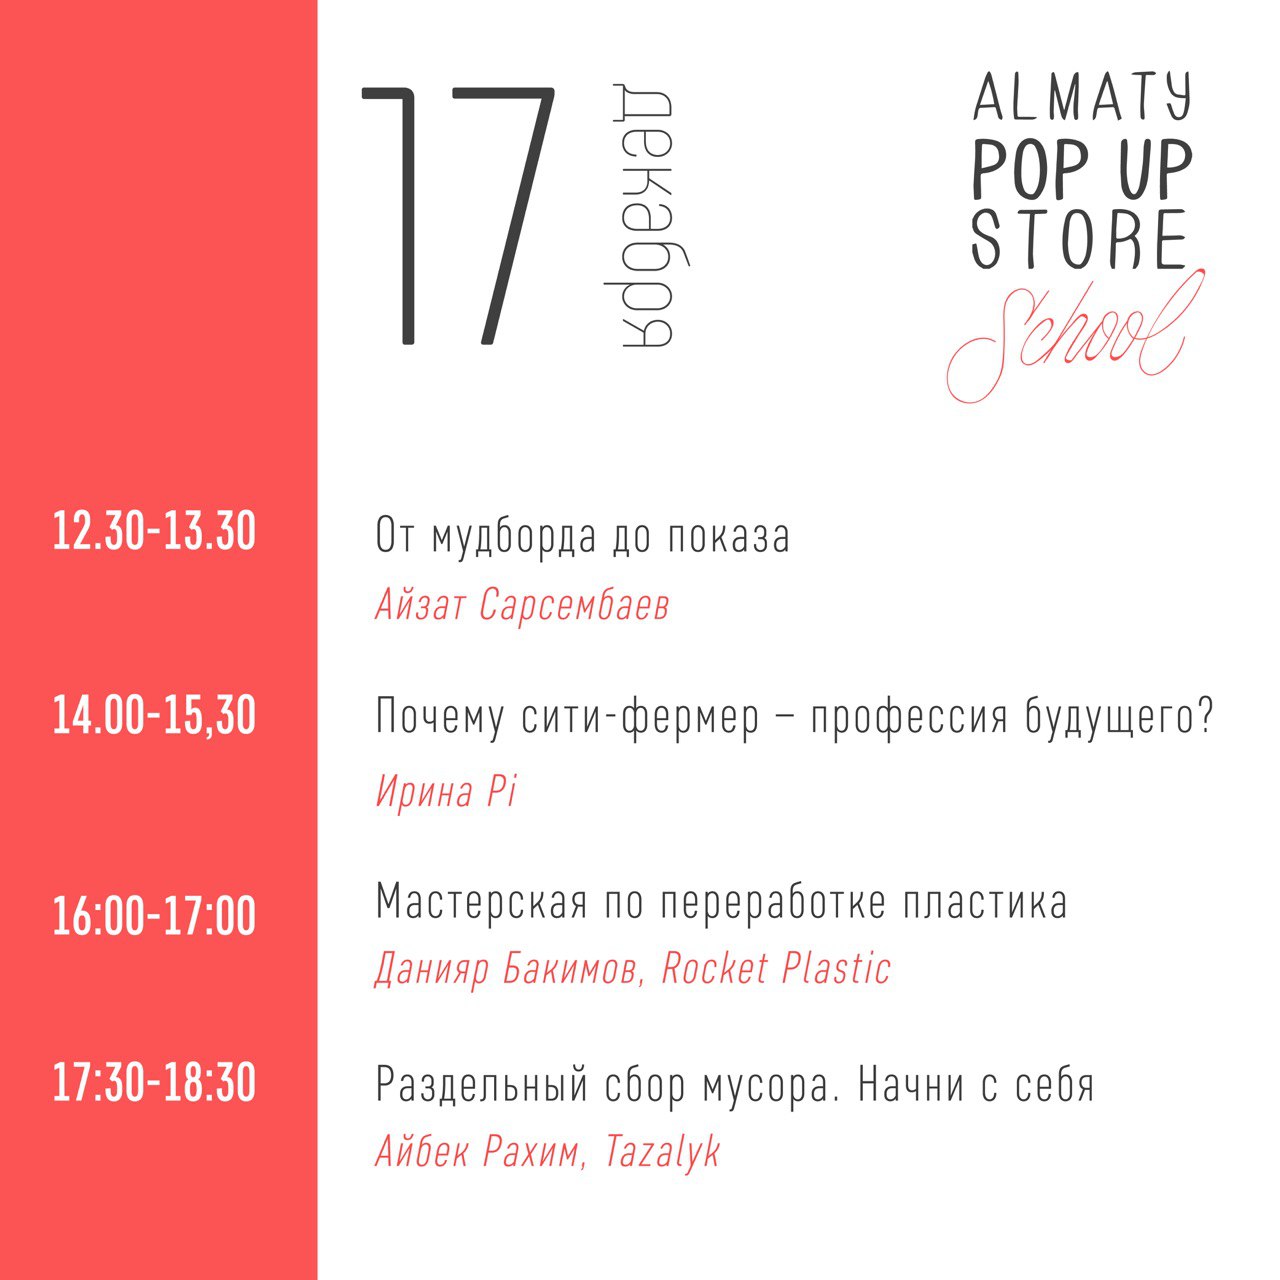 Almaty Pop Up Store